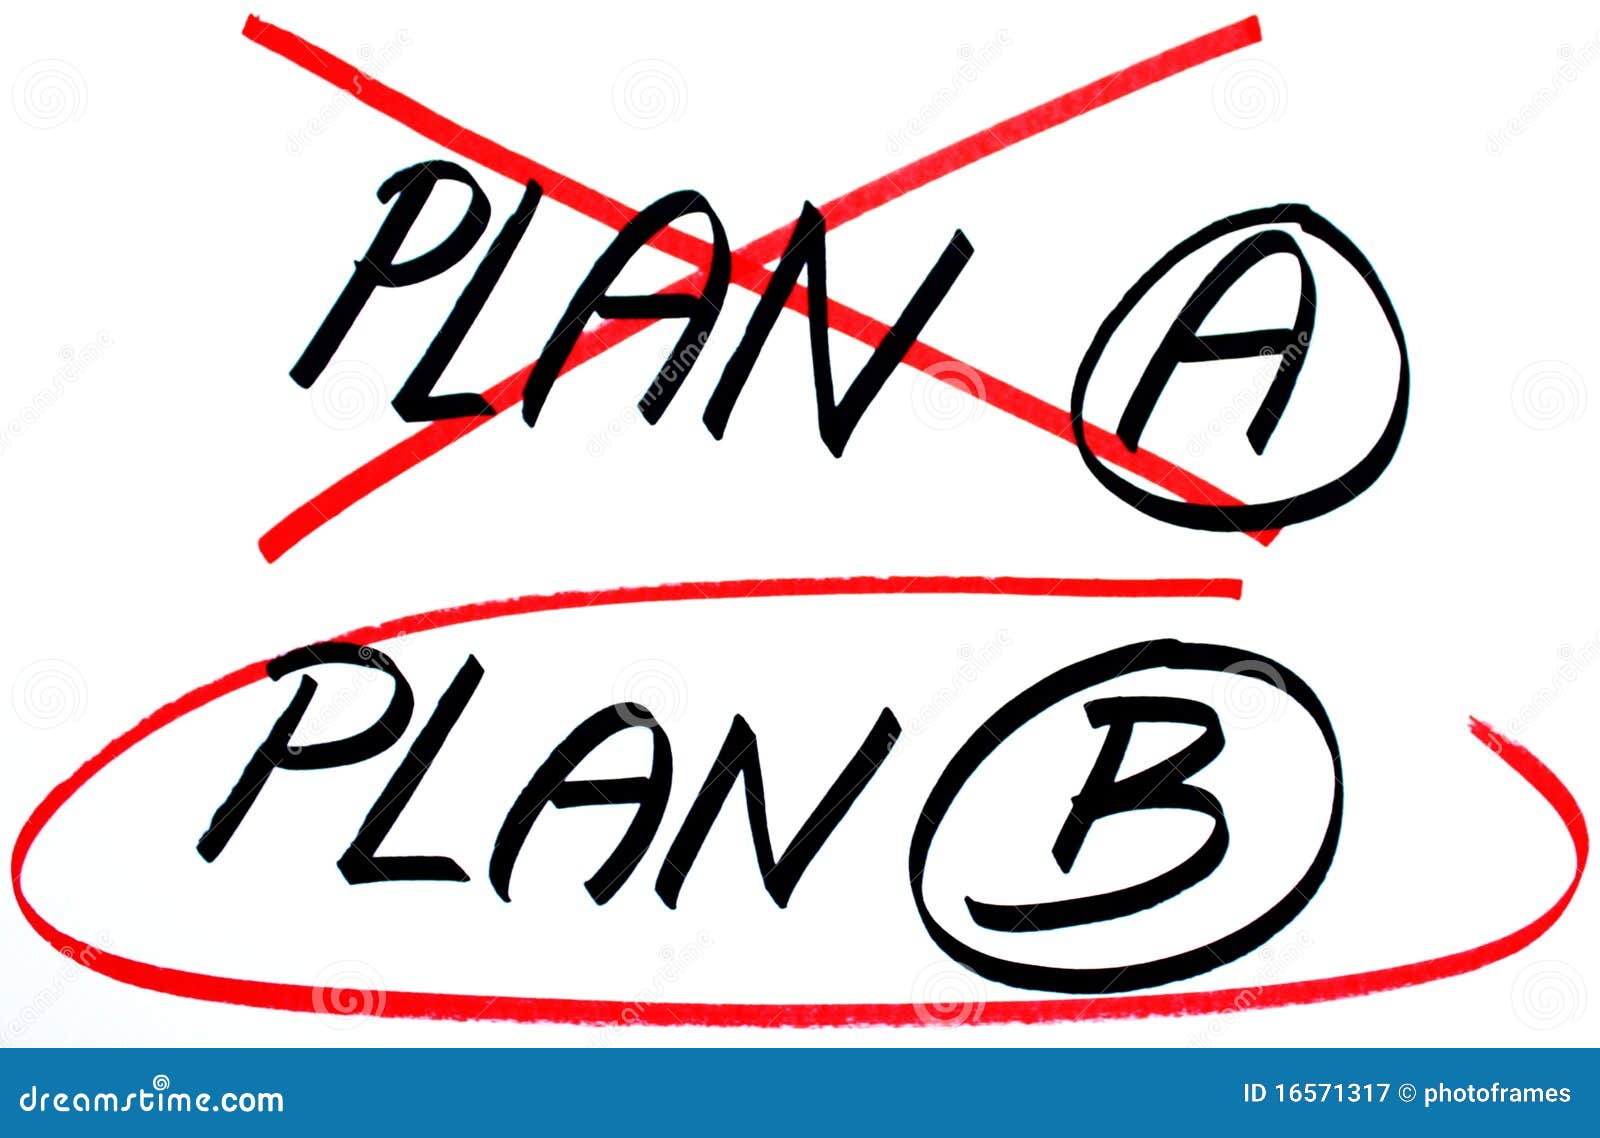 clipart business plan - photo #41